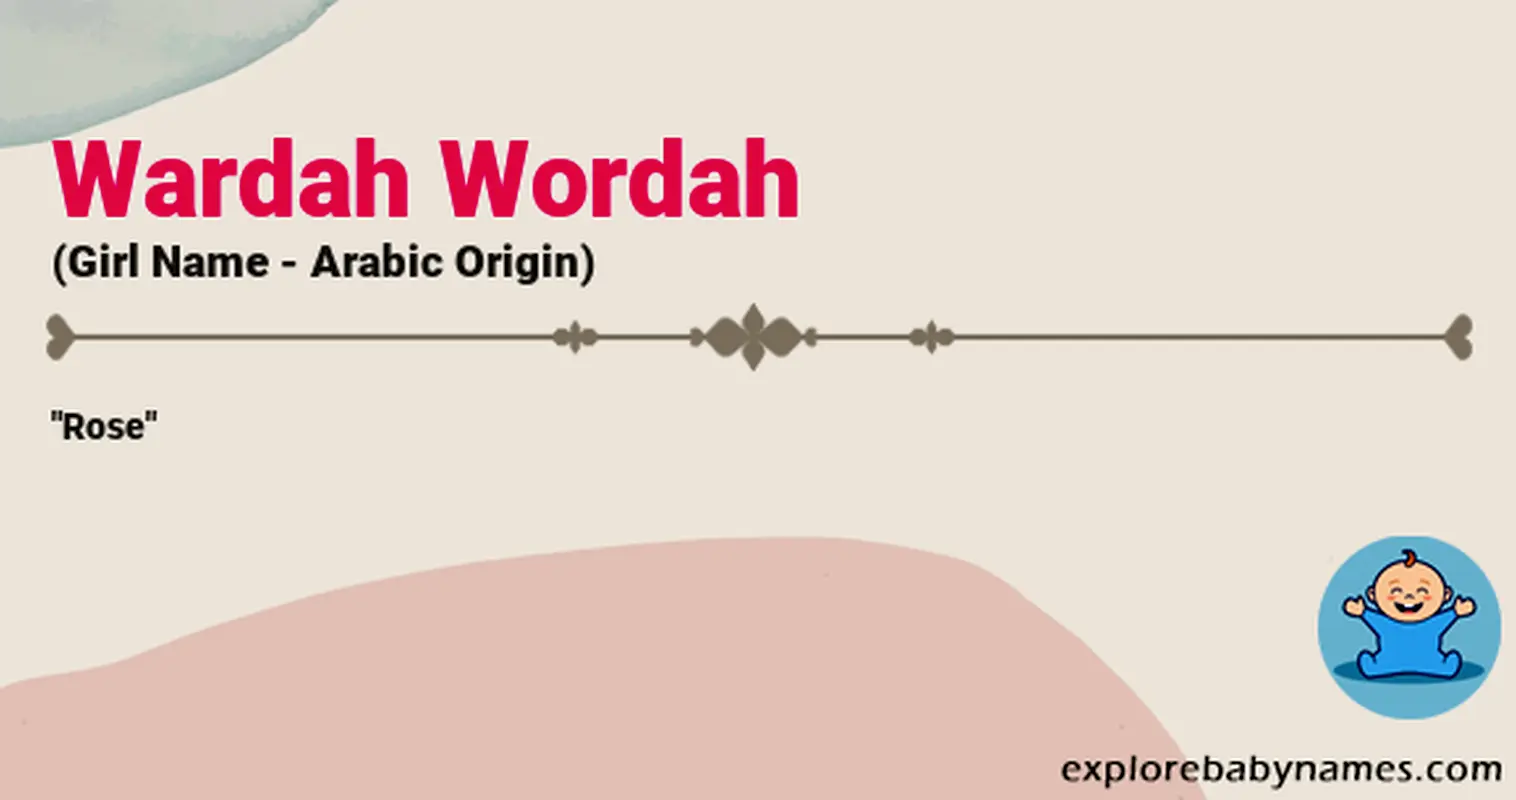 Meaning of Wardah Wordah